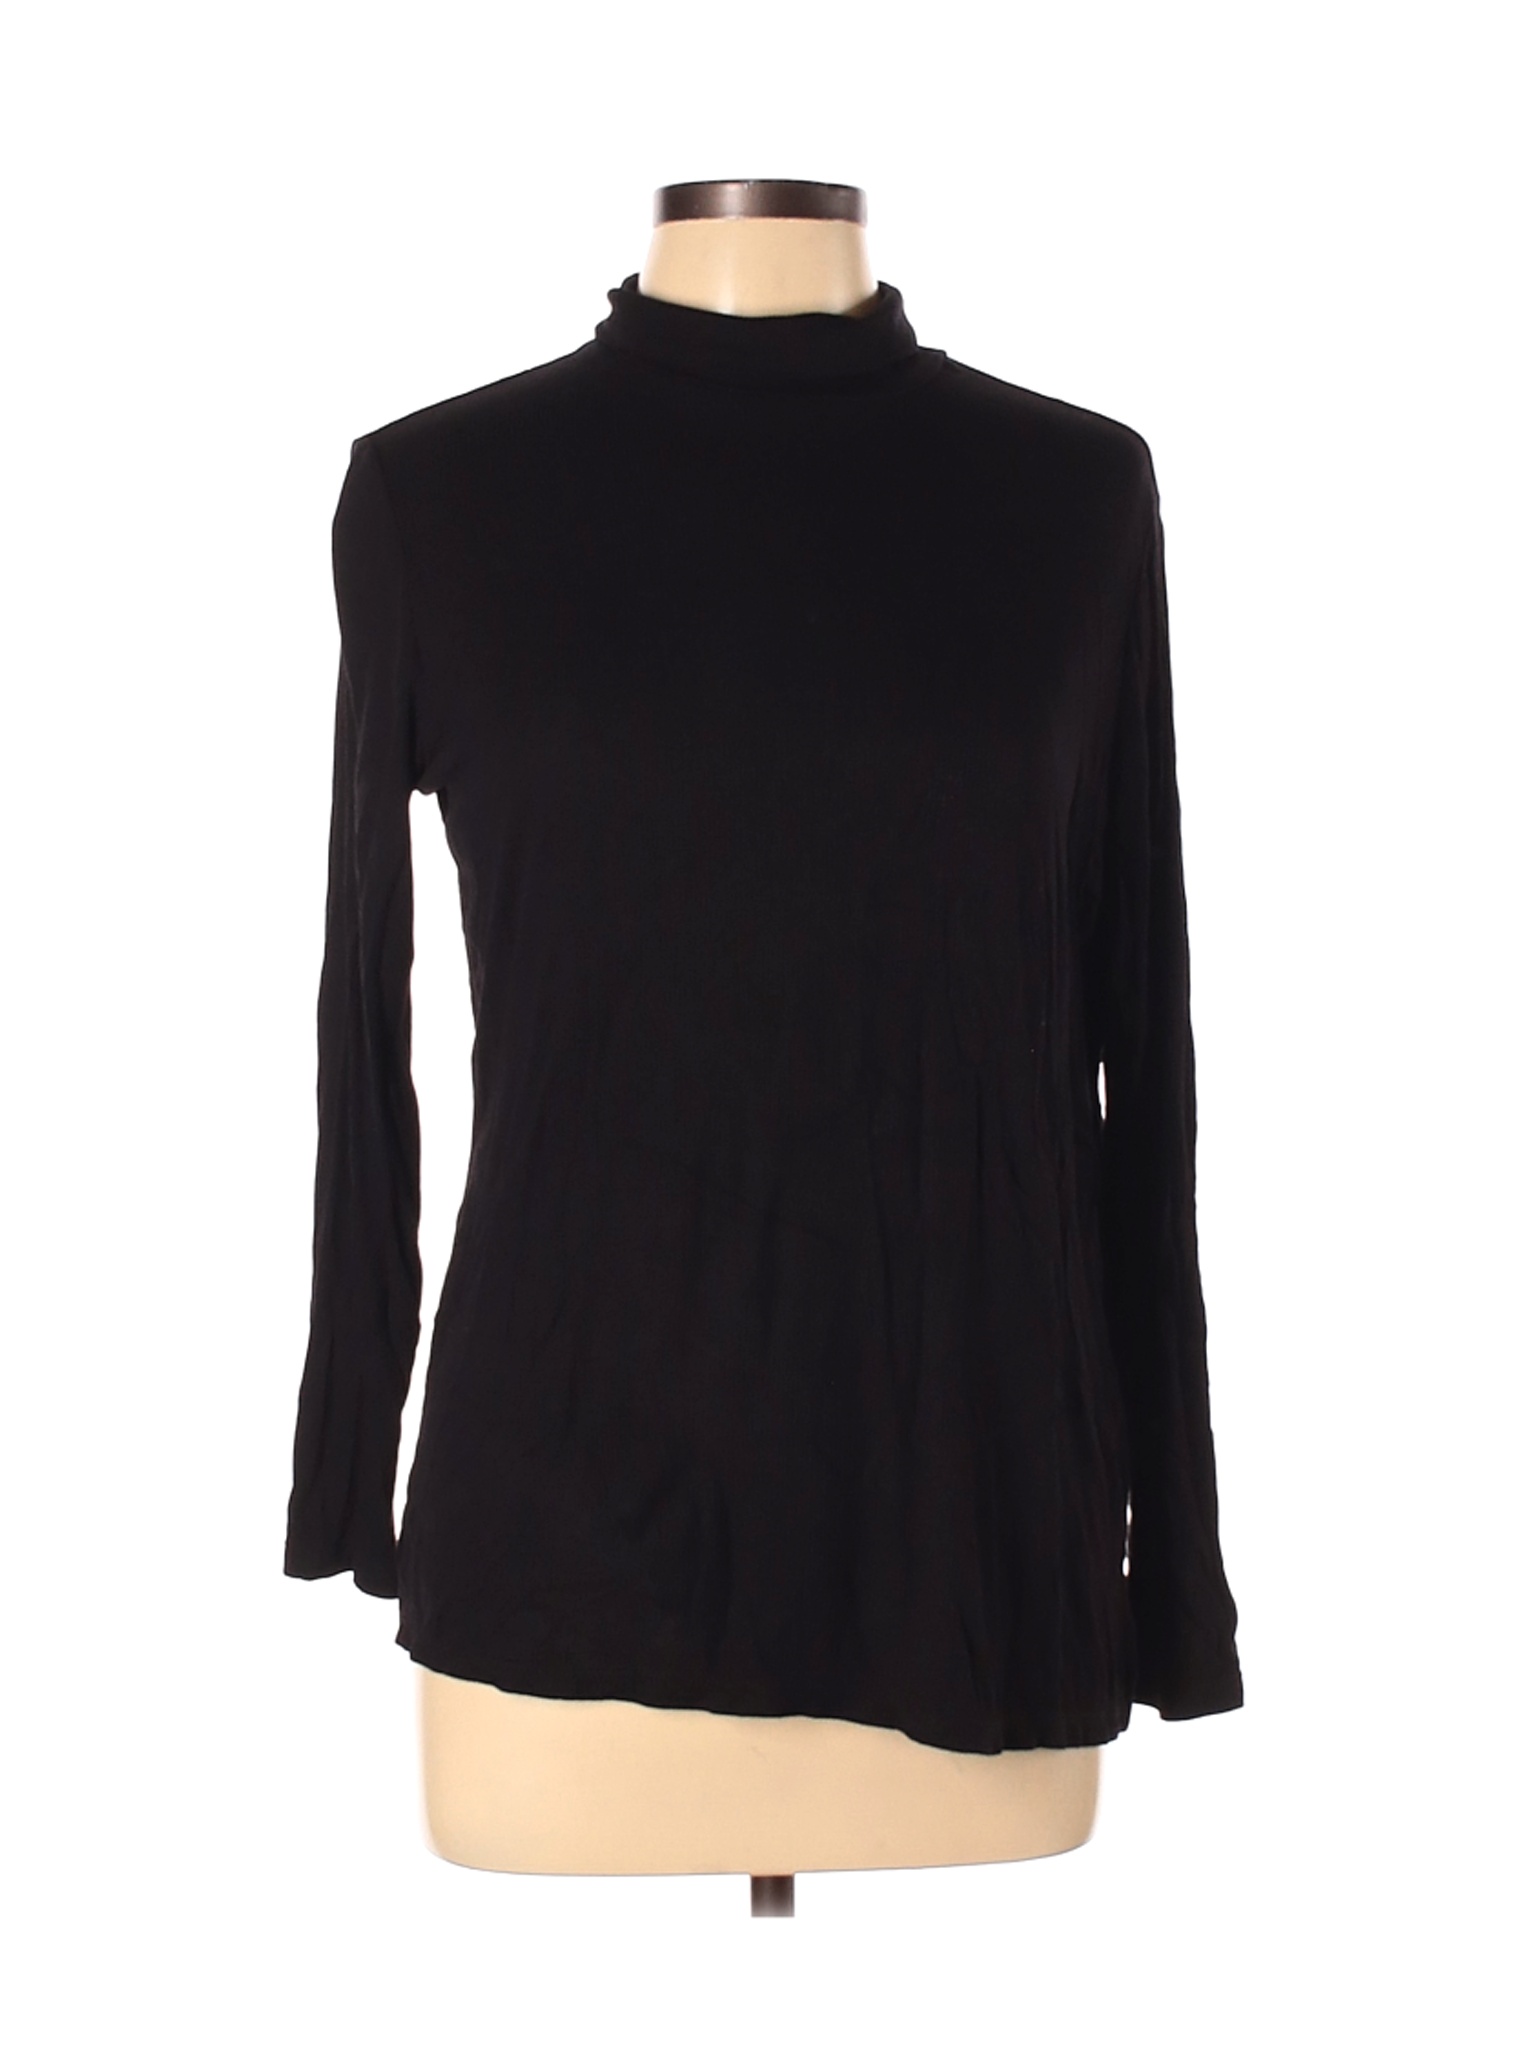 Jones New York Women Black Long Sleeve T-Shirt L | eBay